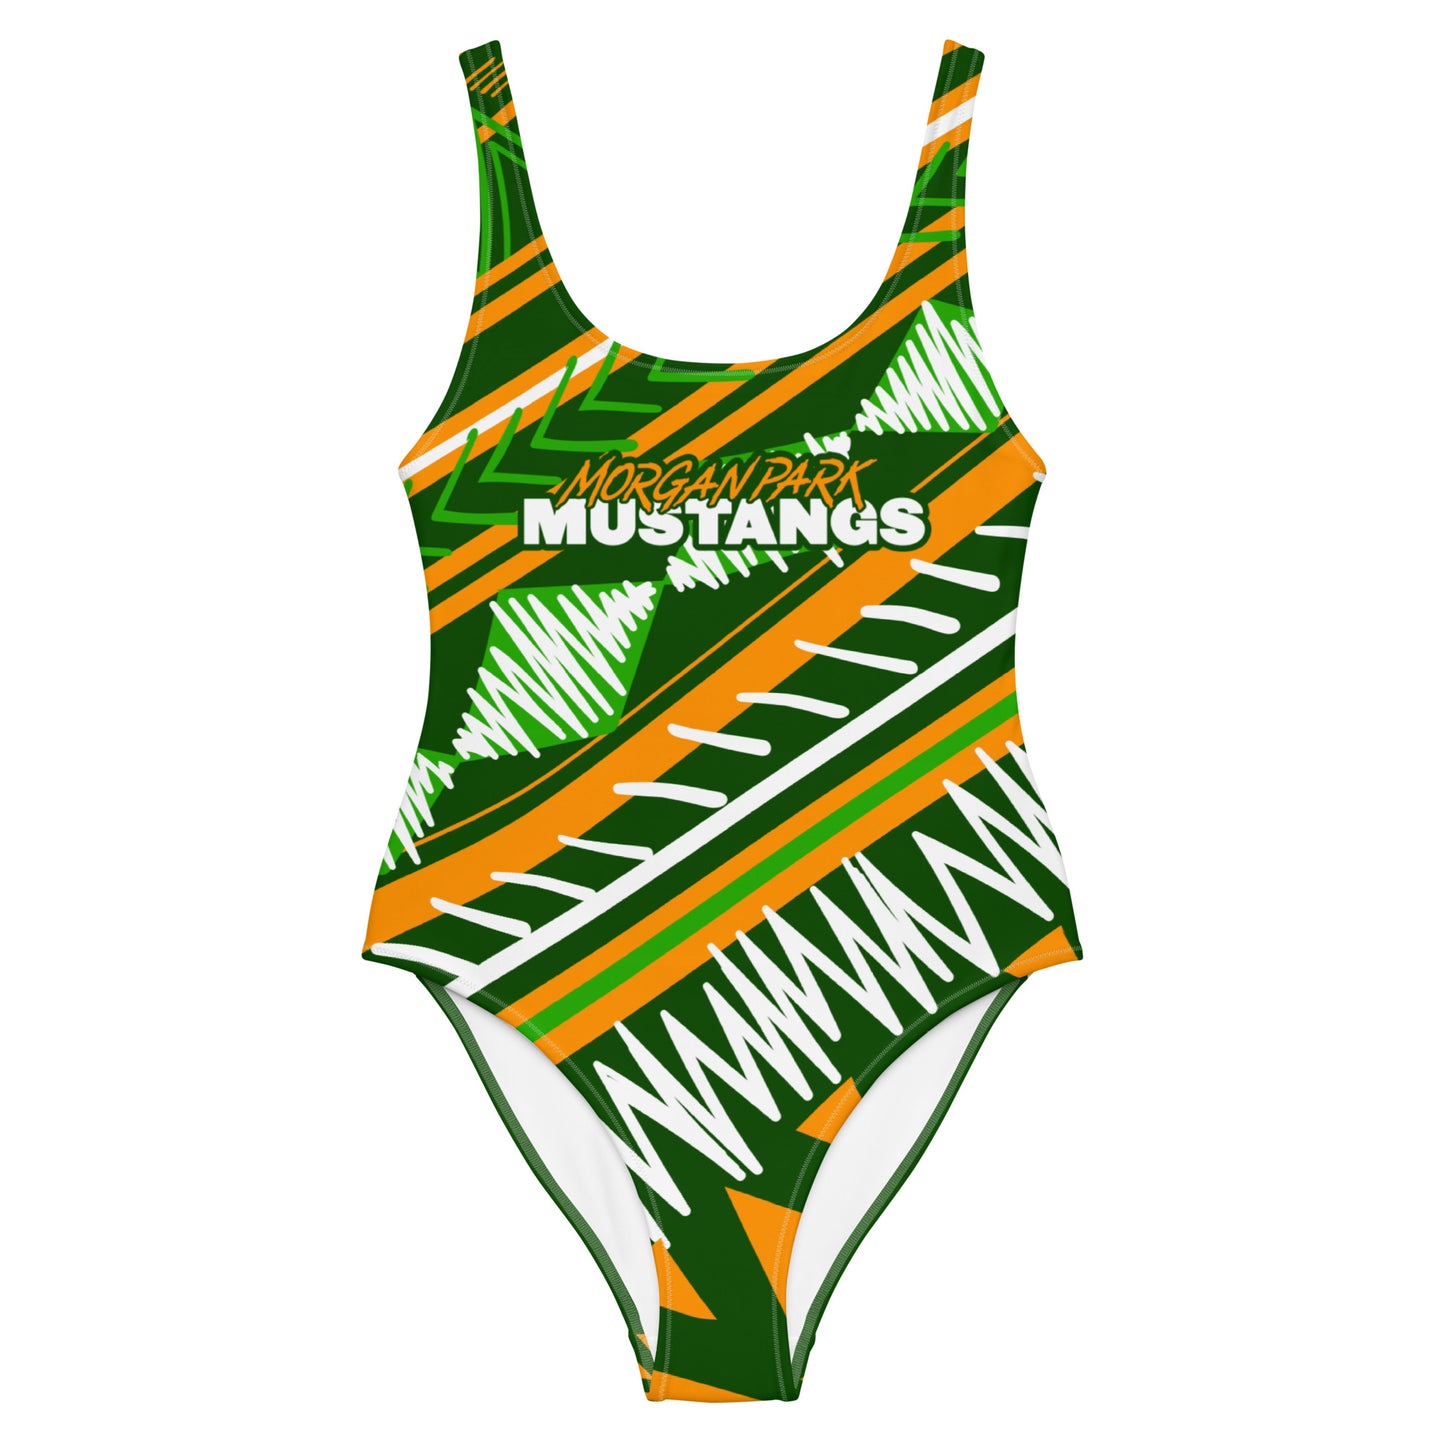 Morgan Park High School Swimsuit | Bodysuit | Morgan Park Mustangs